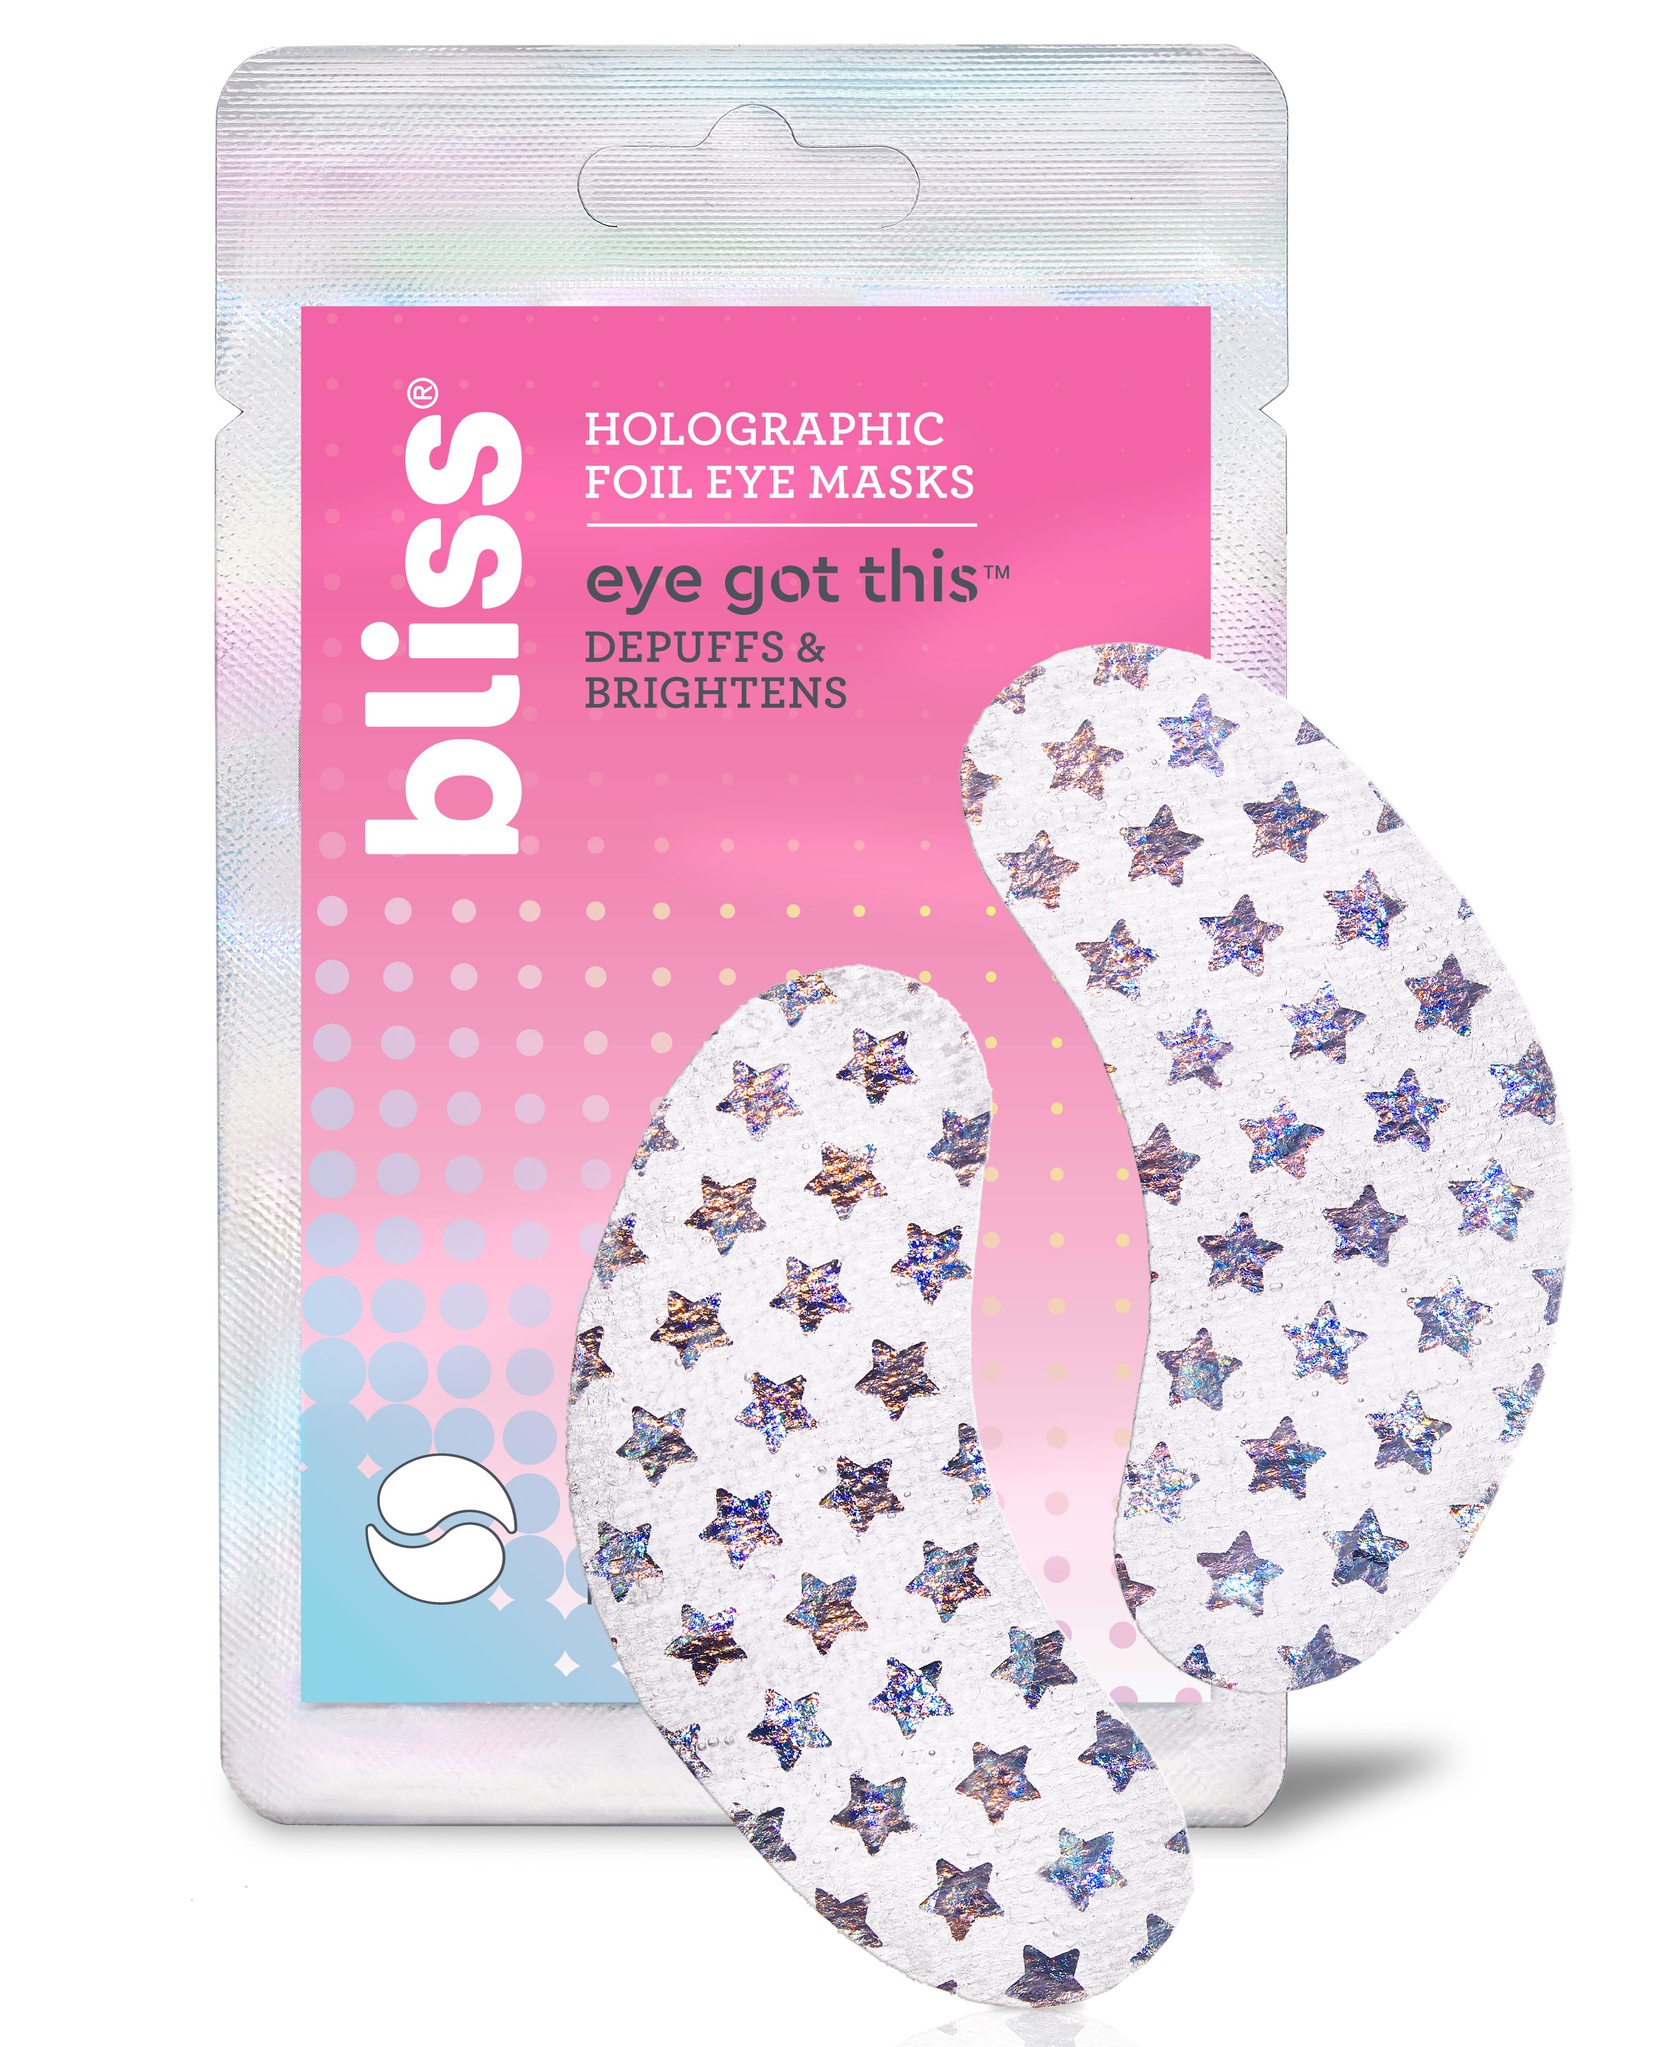 Bliss Eye Got This- Holographic Foil Eye Masks